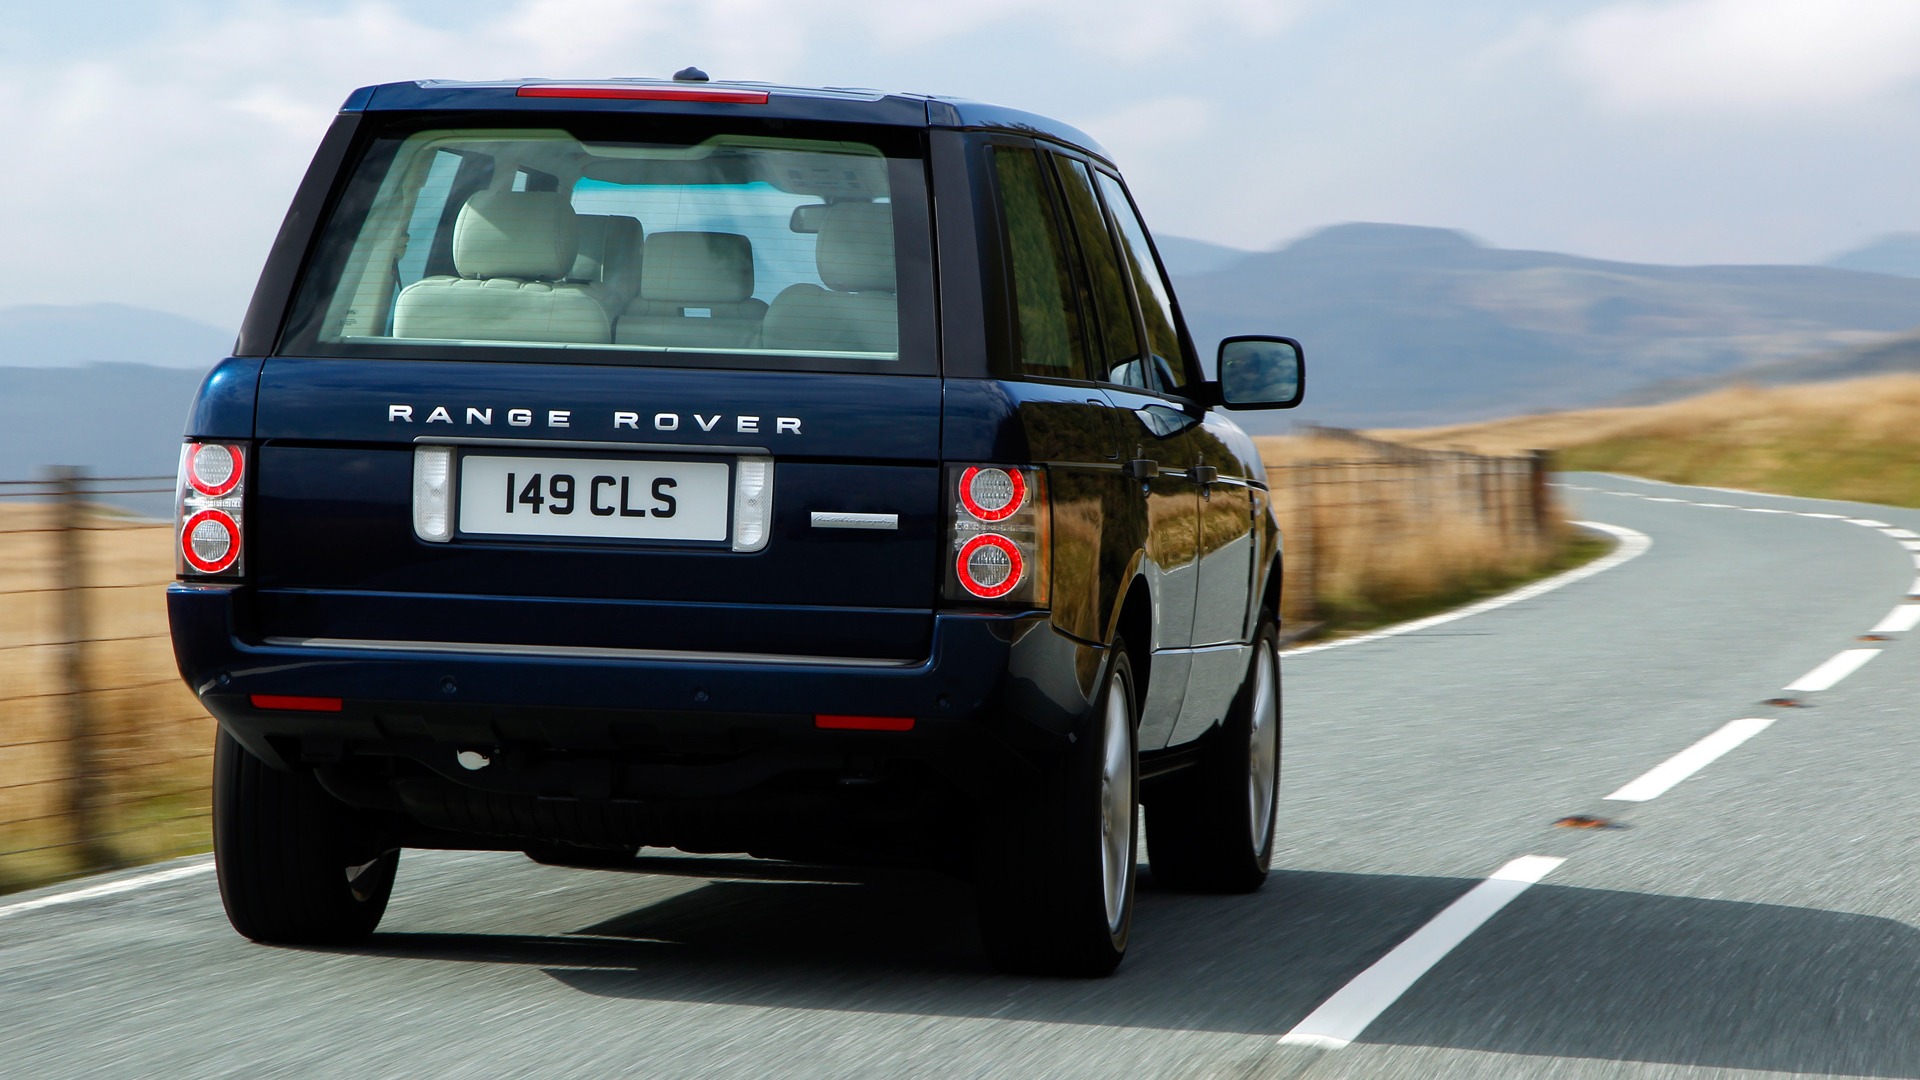 Land Rover Range Rover - 2011 路虎13 - 1920x1080